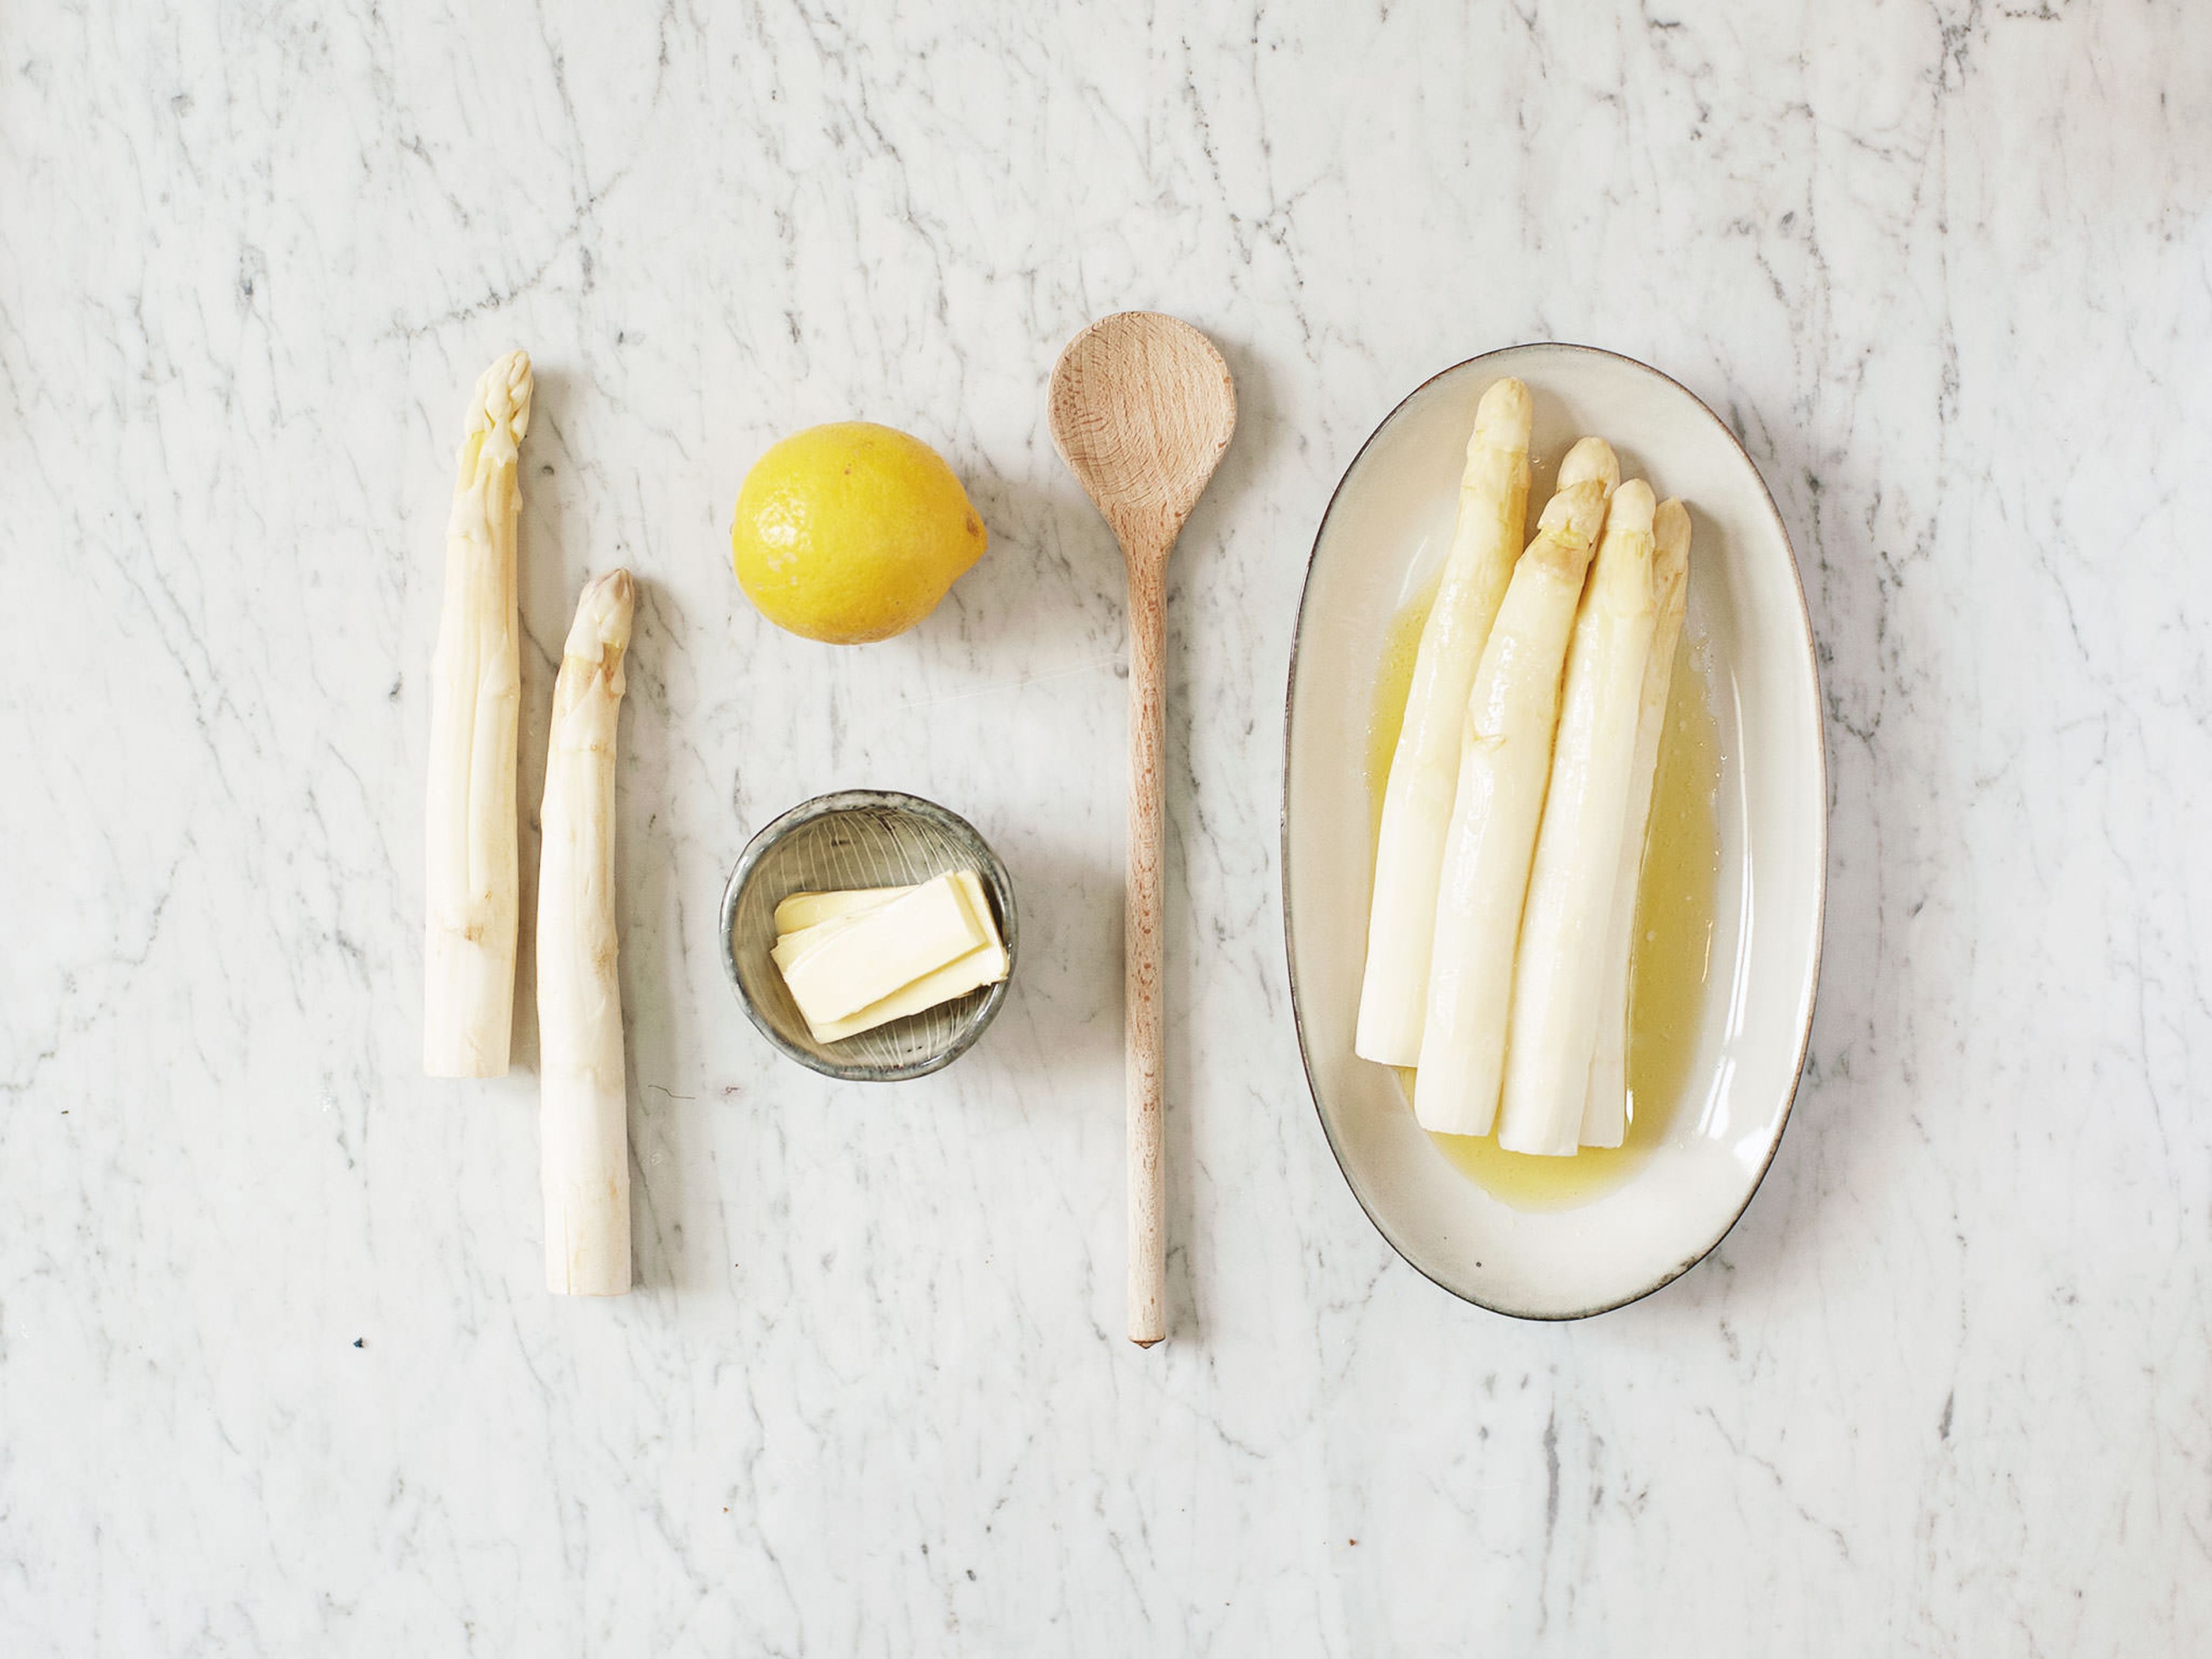 How to prepare white asparagus